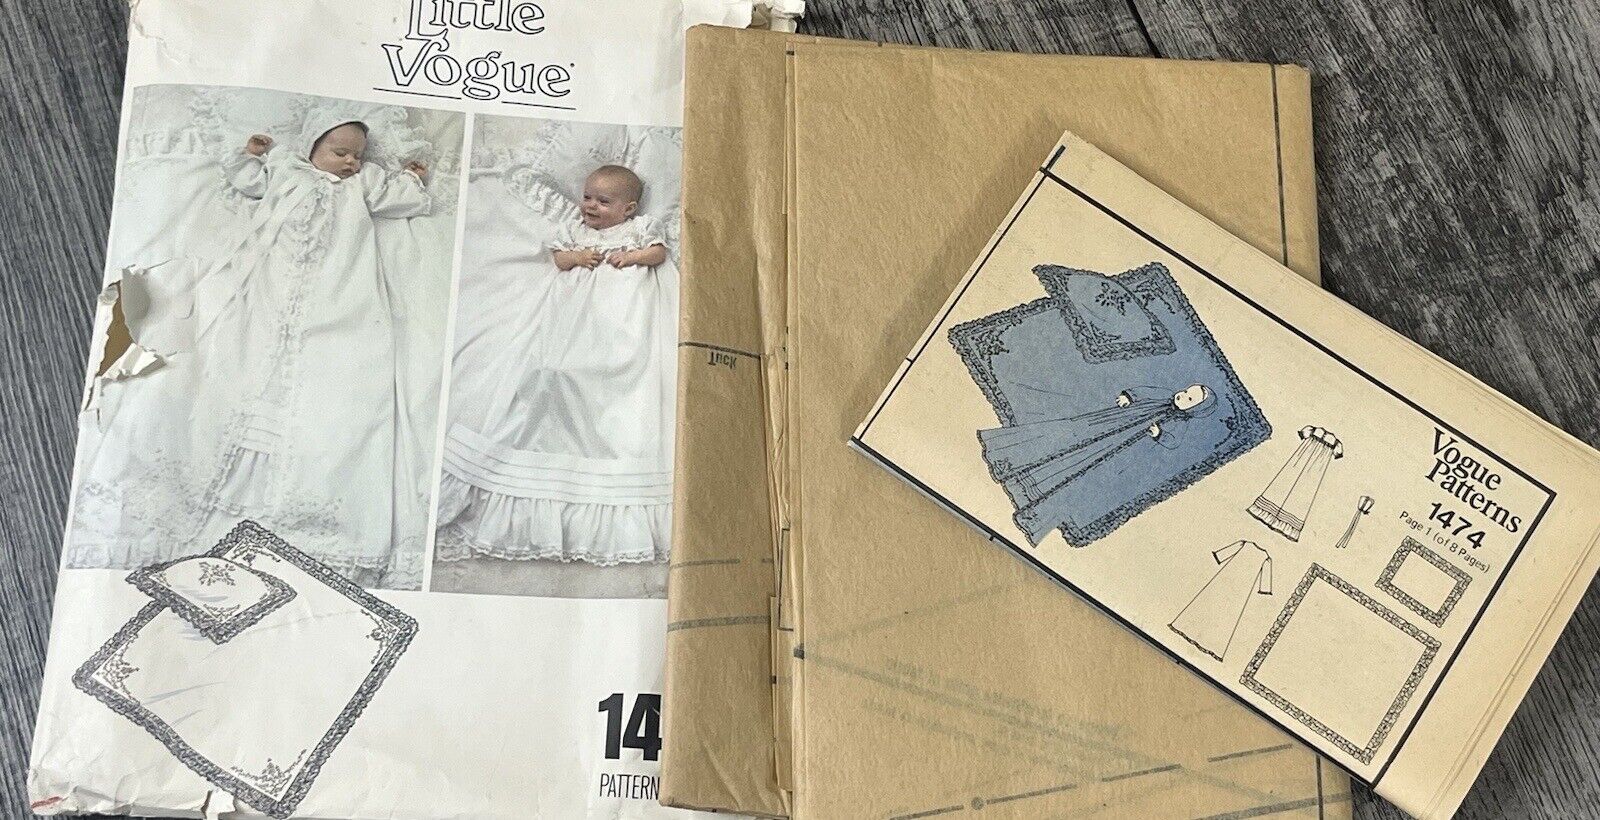 VTG Little Vogue Sewing 1474 Infant Christening Gown Coat Bonnet Pillow Pattern